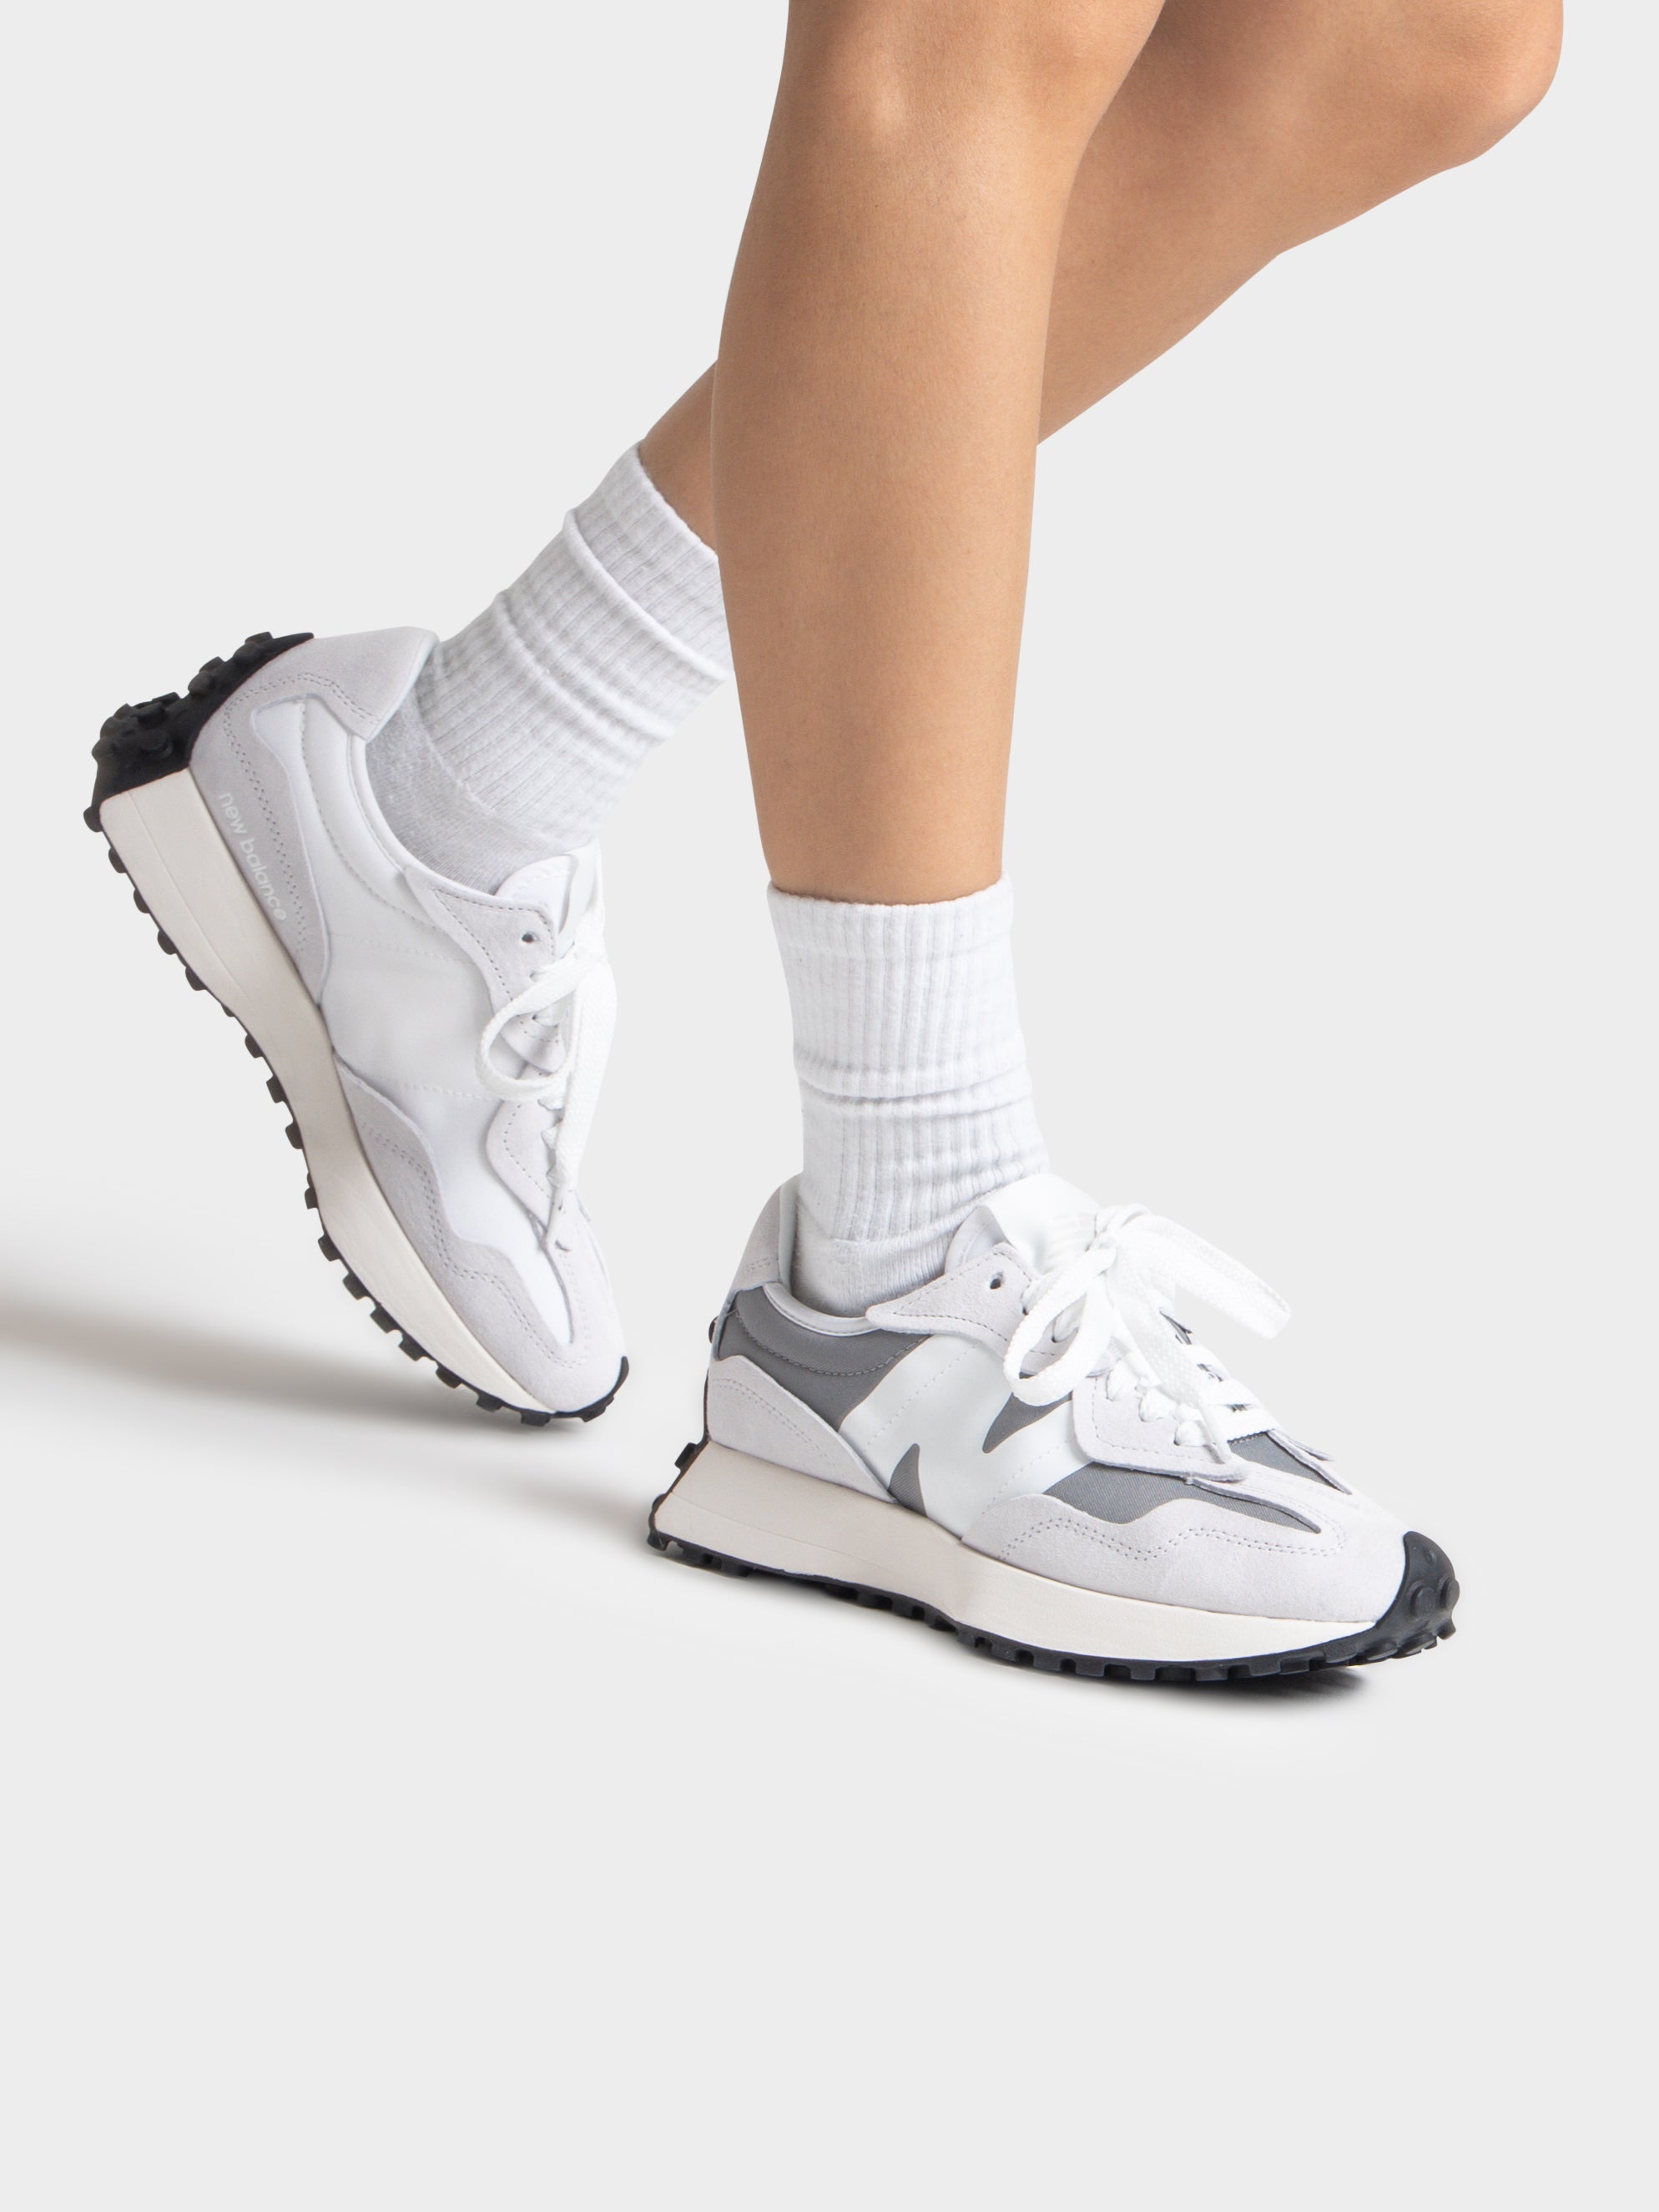 Unisex 327 Sneakers in White & Grey